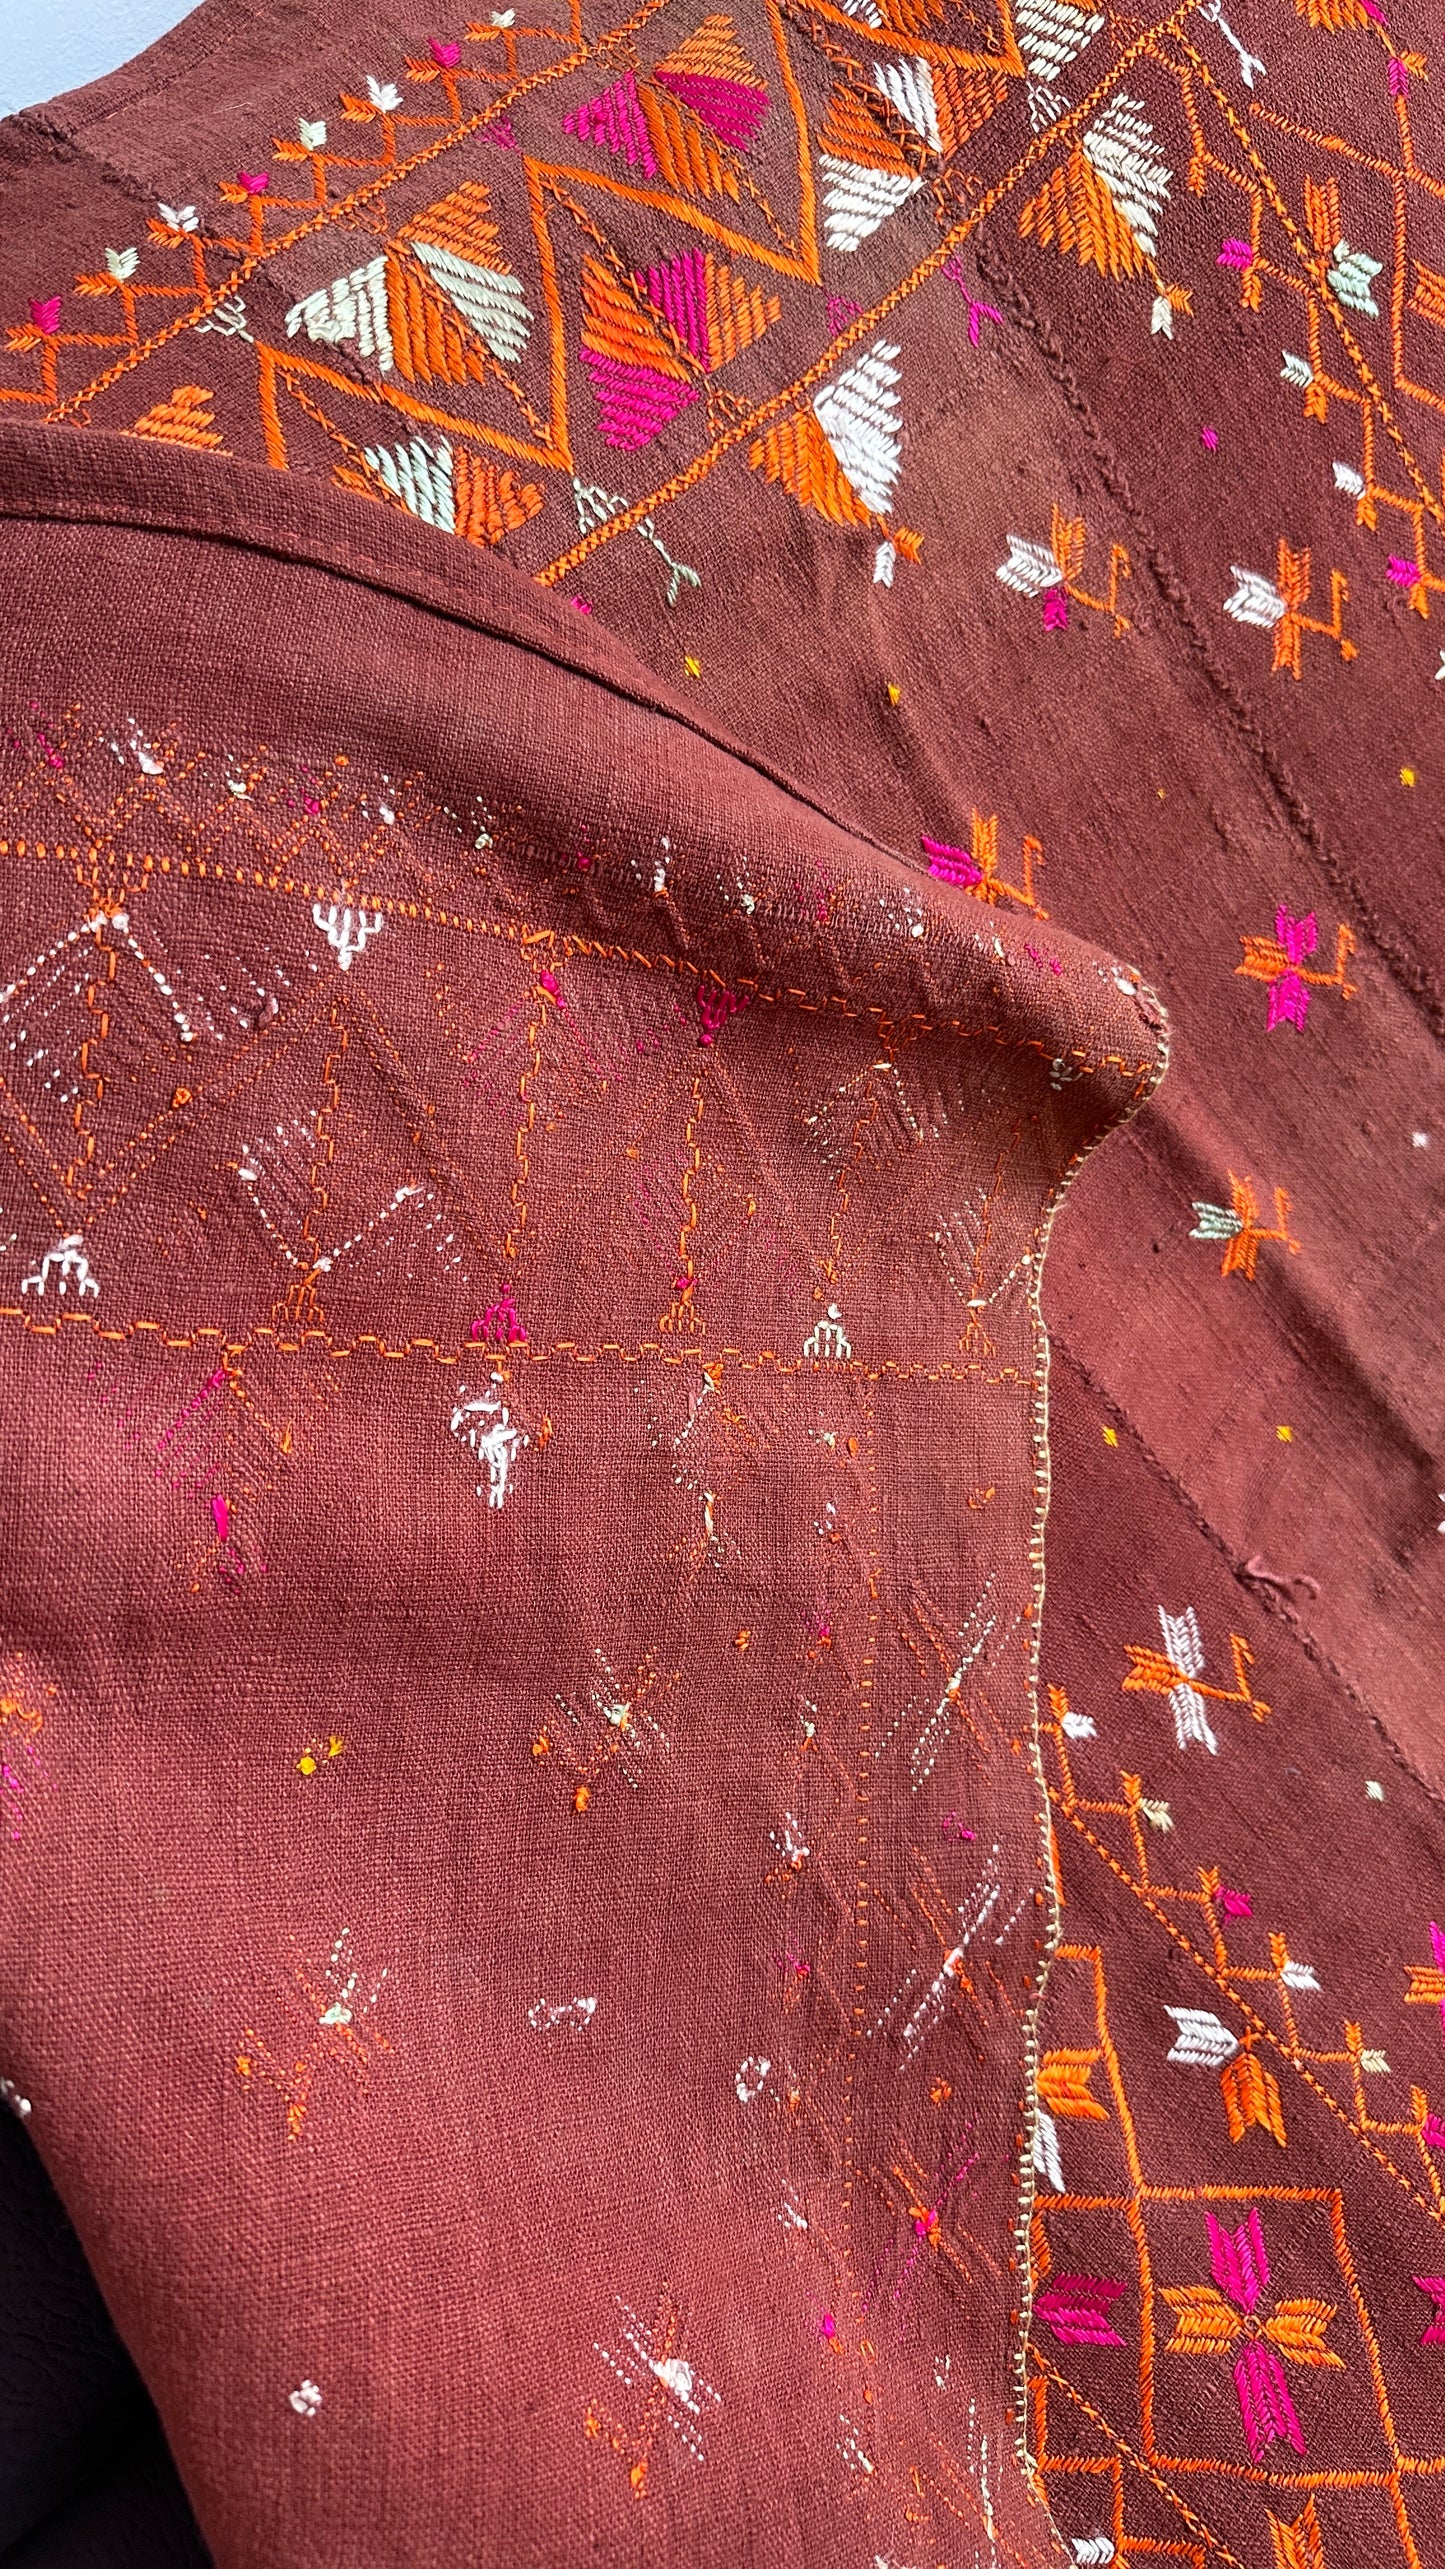 Vintage(preloved) Hand work khaddar baagh phulkari shawl dupatta